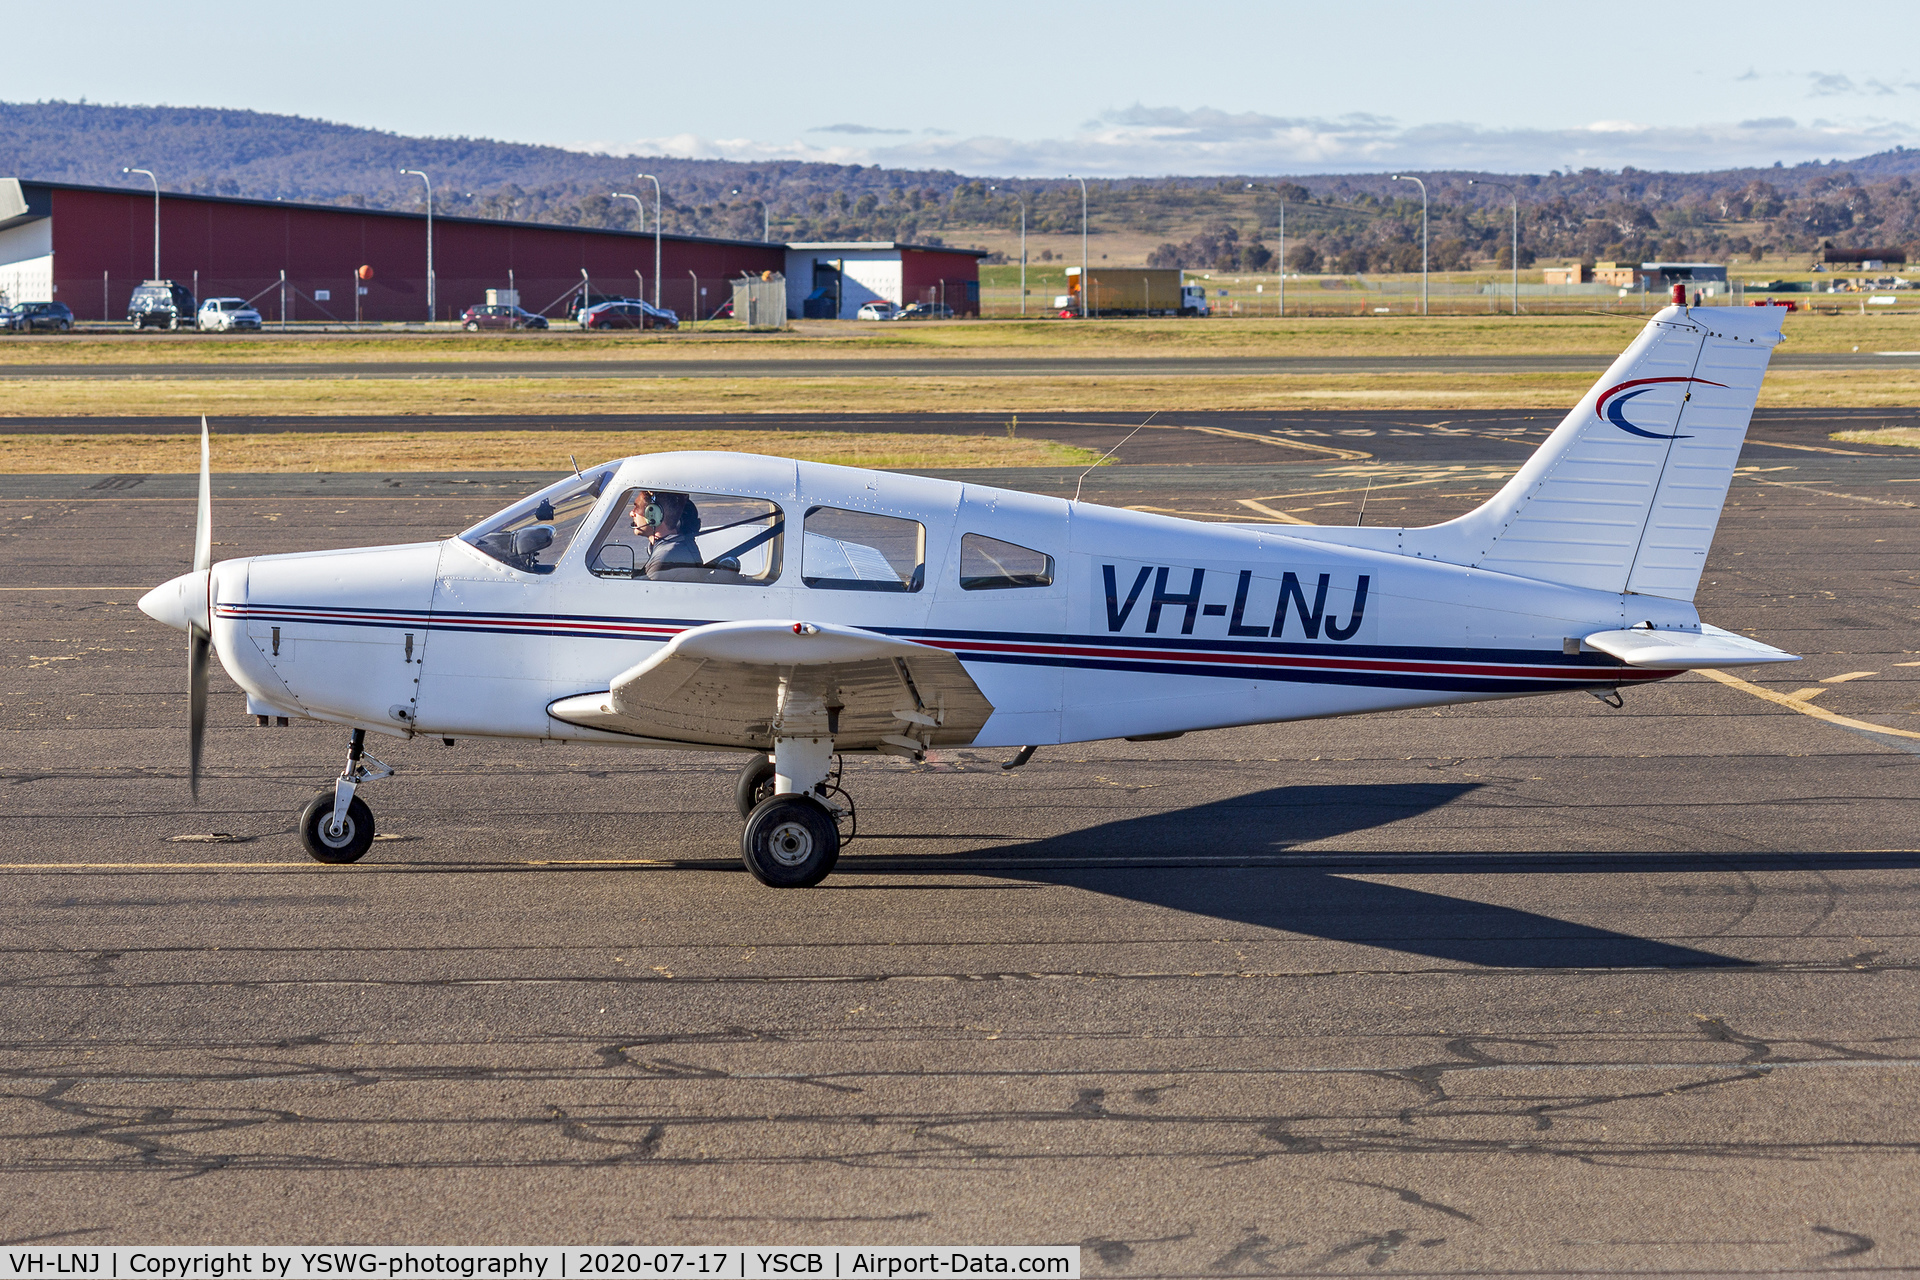 VH-LNJ, 1977 Piper PA-28-151 Cherokee Warrior C/N 28-7715154, Meehan Traders (VH-LNJ) Piper PA-28-151 Cherokee Warrior taxiing at Canberra Airport.